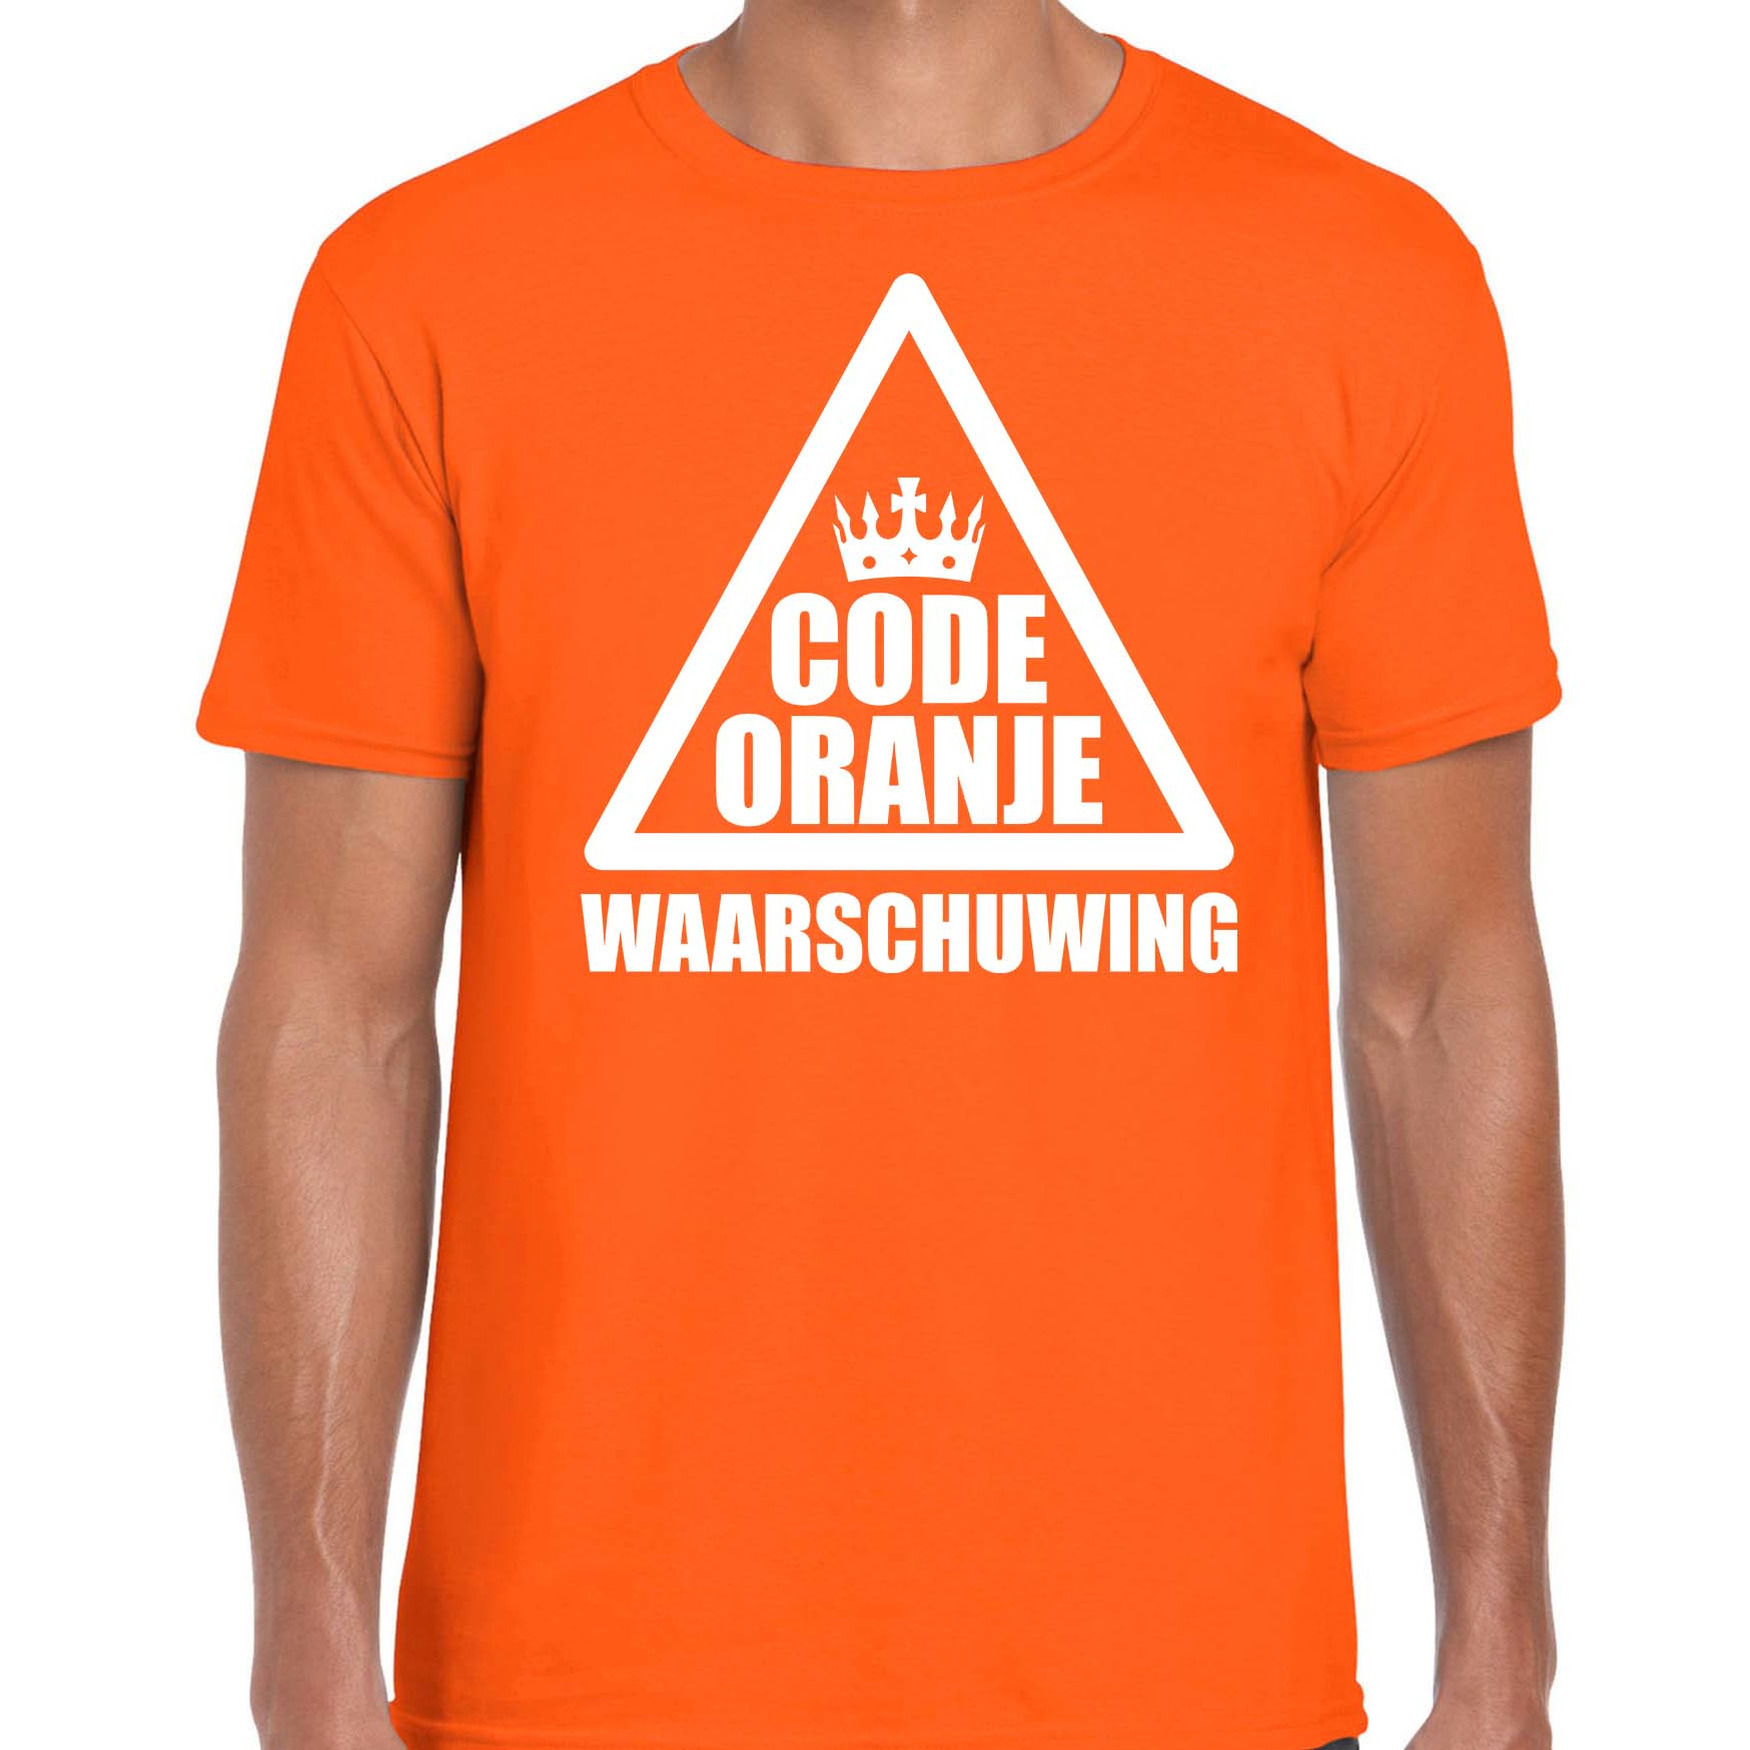 Code oranje waarschuwing t shirt oranje voor heren Koningsdag EK WK shirts